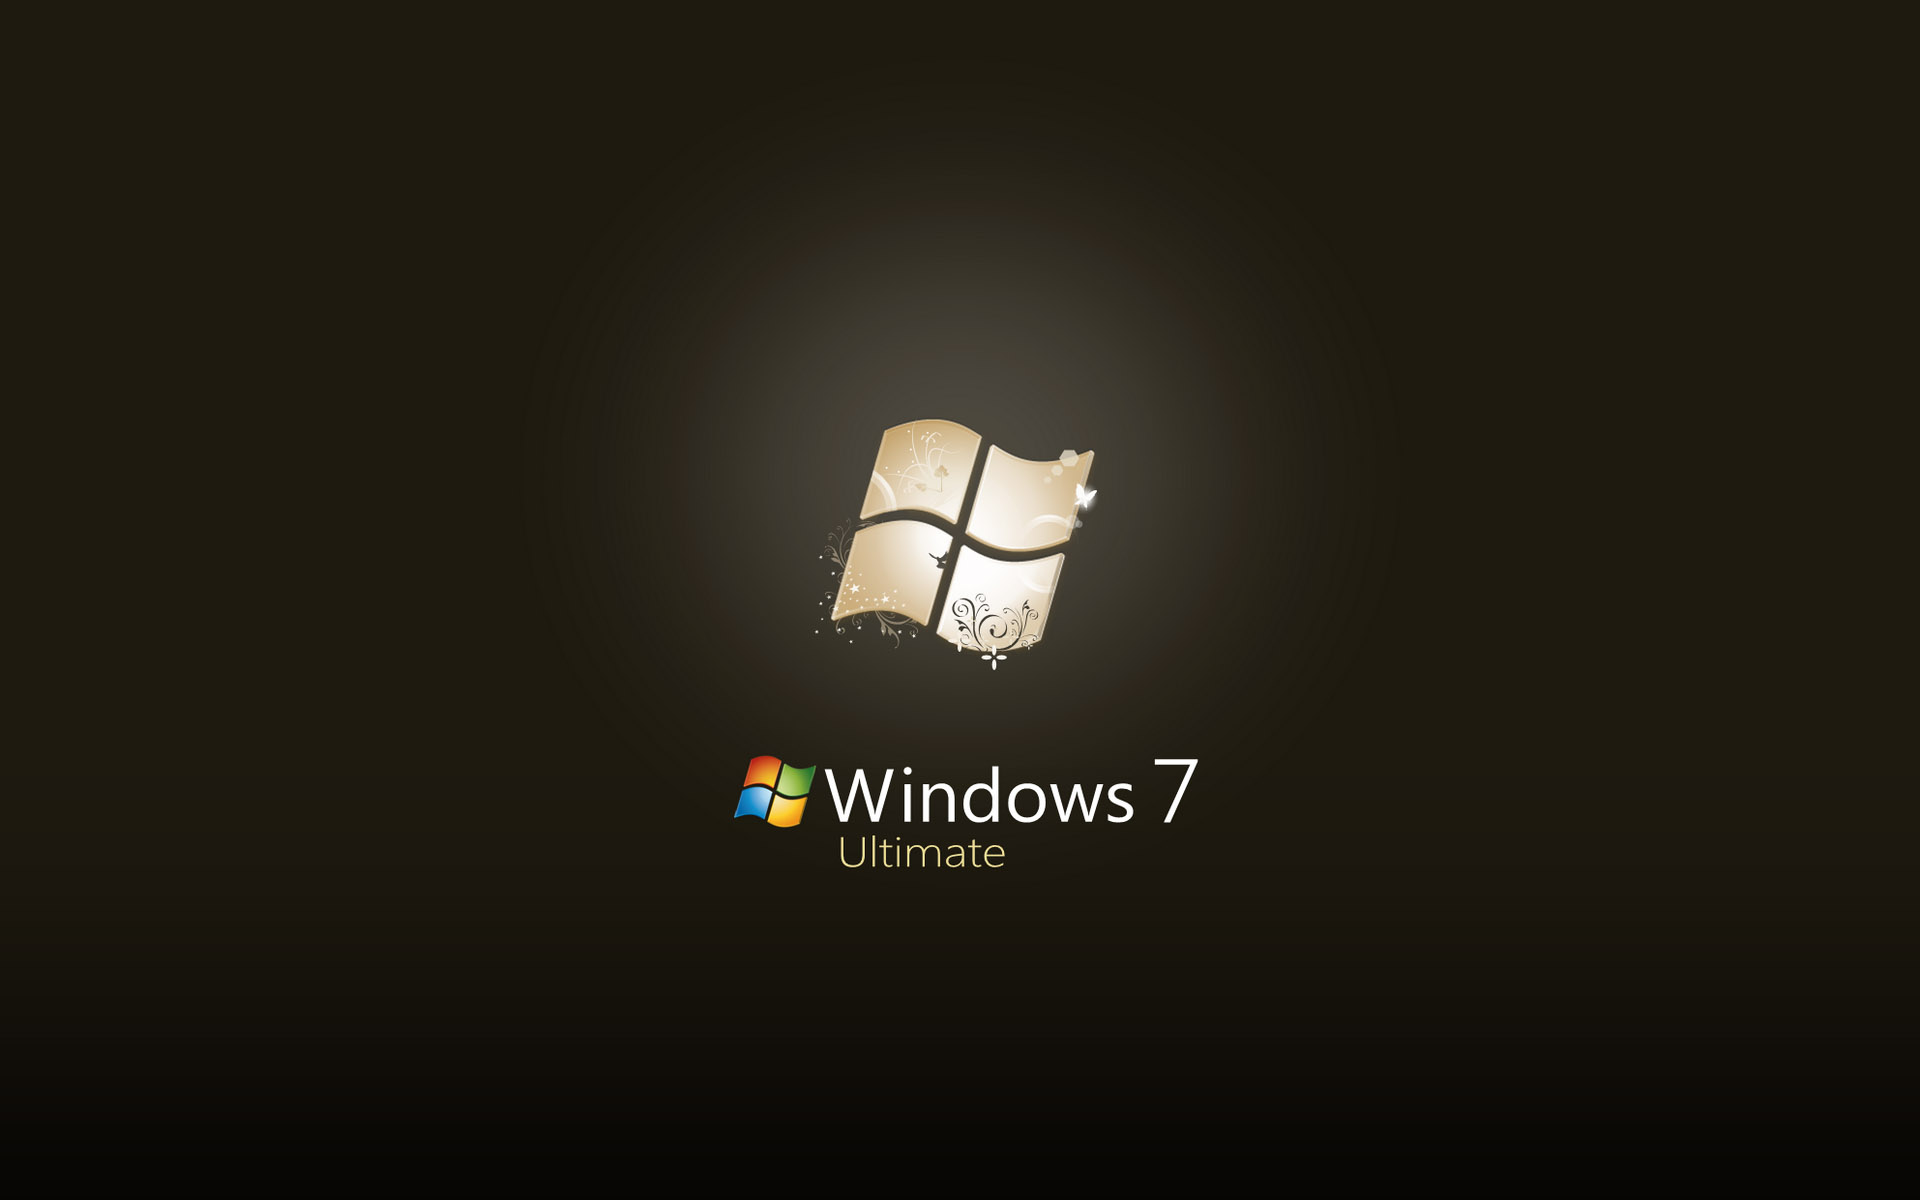 windows 7, technology, microsoft, logo, windows, windows 7 ultimate 5K